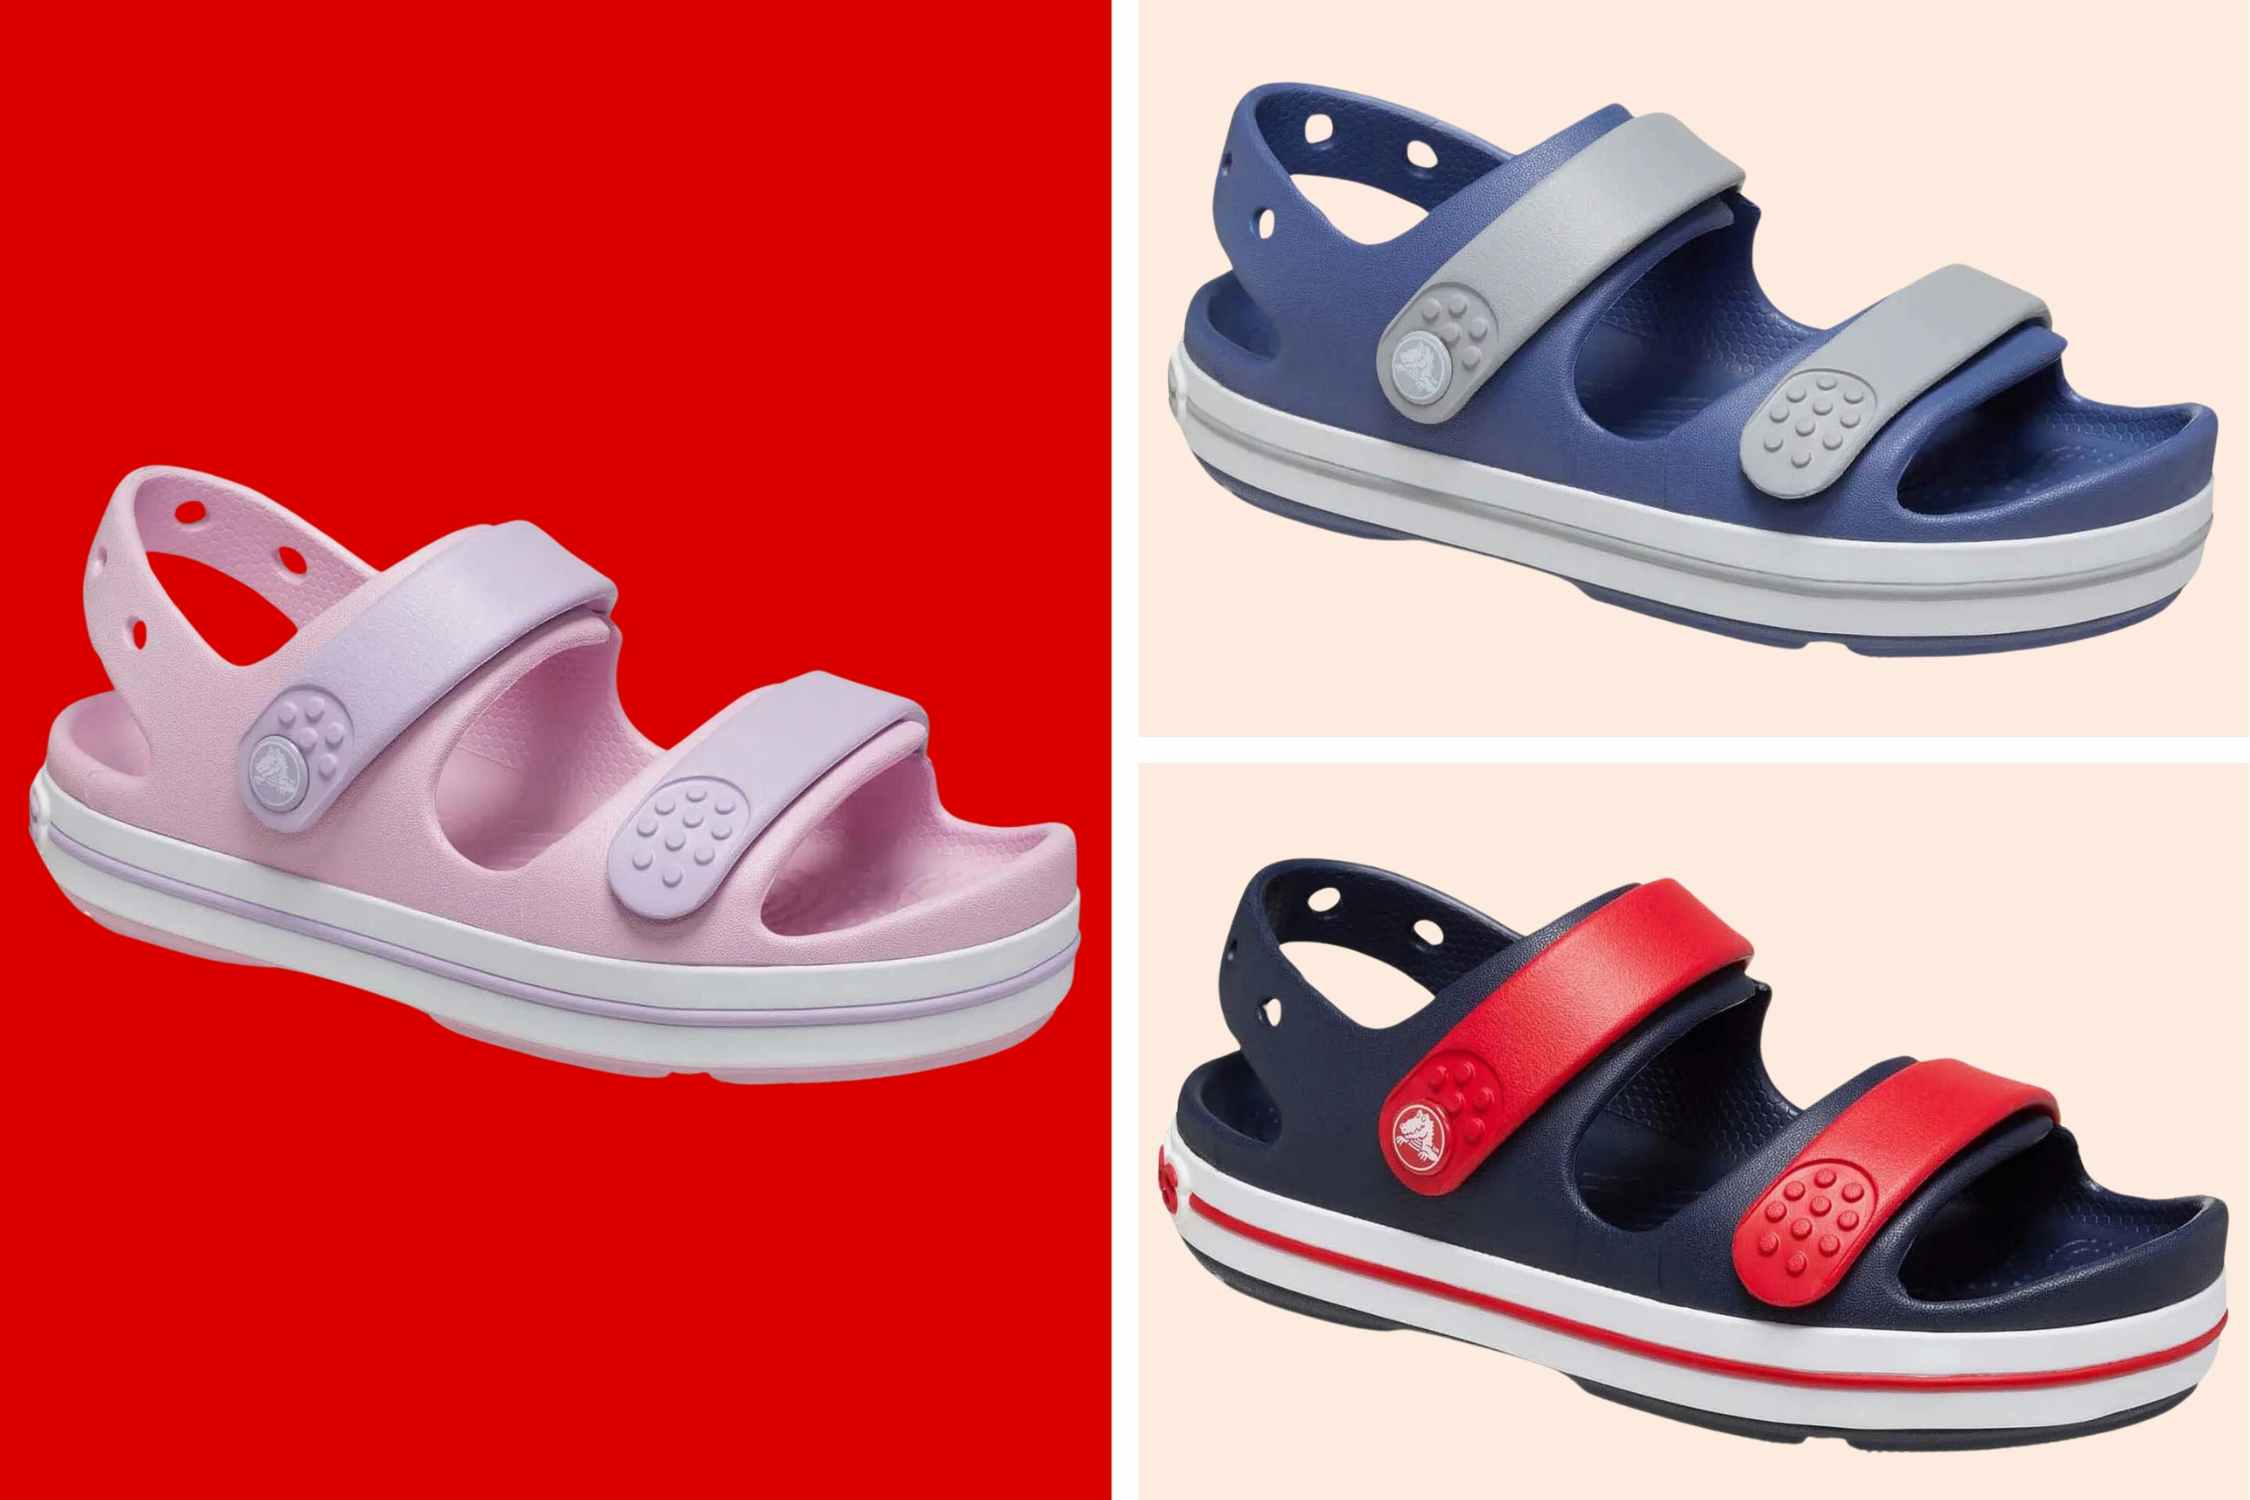 $17 Toddler and Kids’ Crocs Crocband Sandals at Walmart ($35 on Amazon)